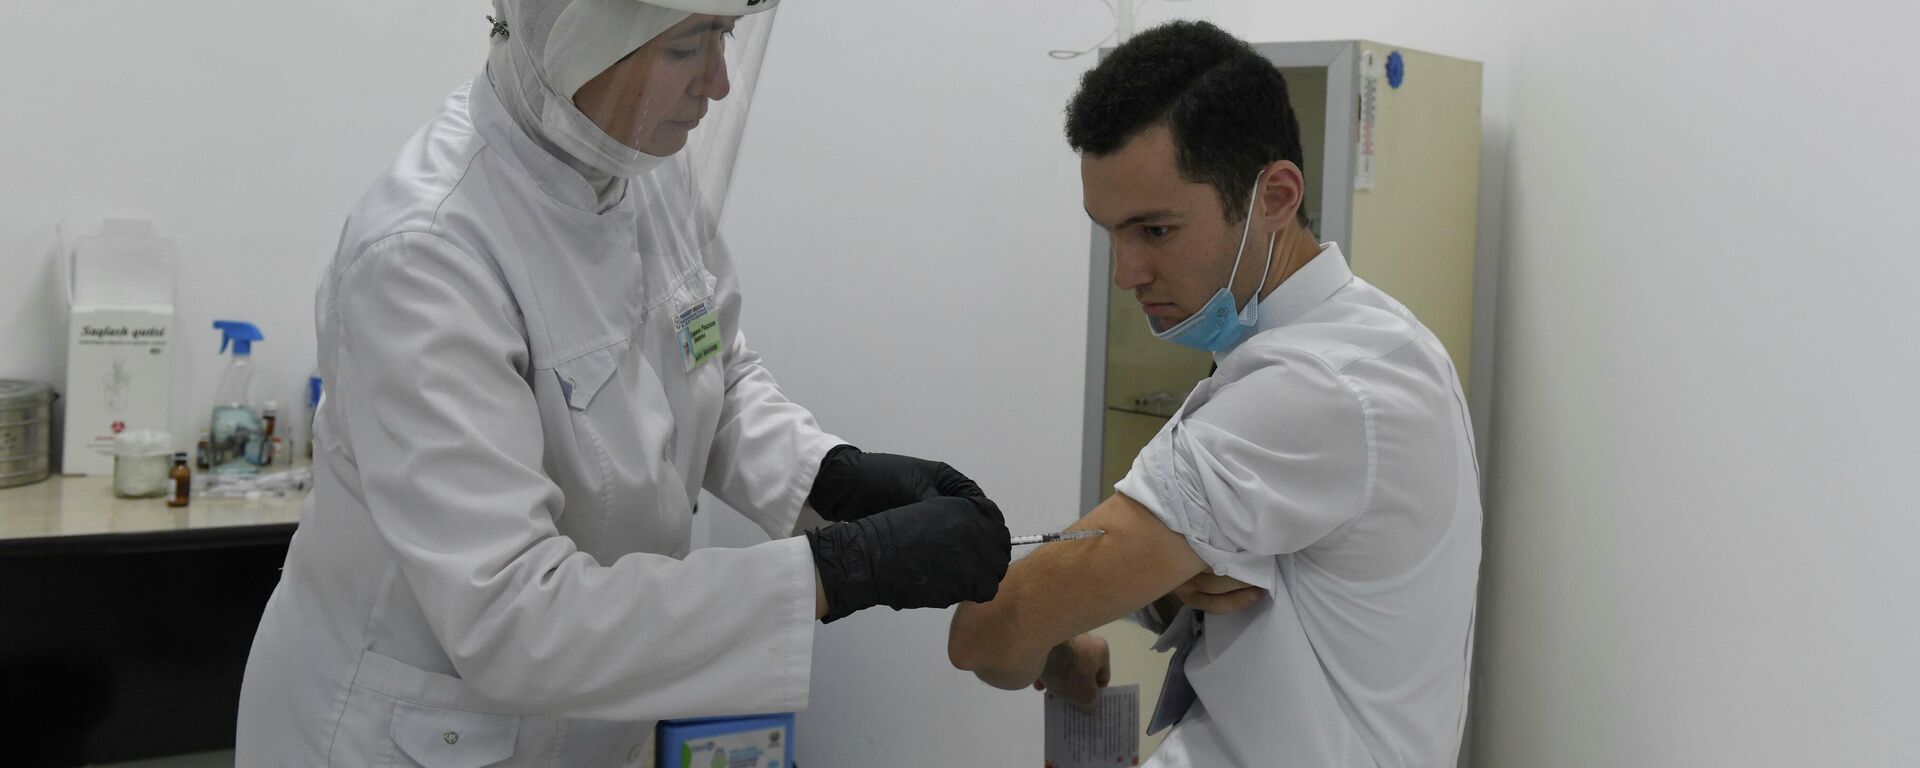 Пациент на пункте вакцинации делает прививку от коронавируса - Sputnik Узбекистан, 1920, 29.06.2021